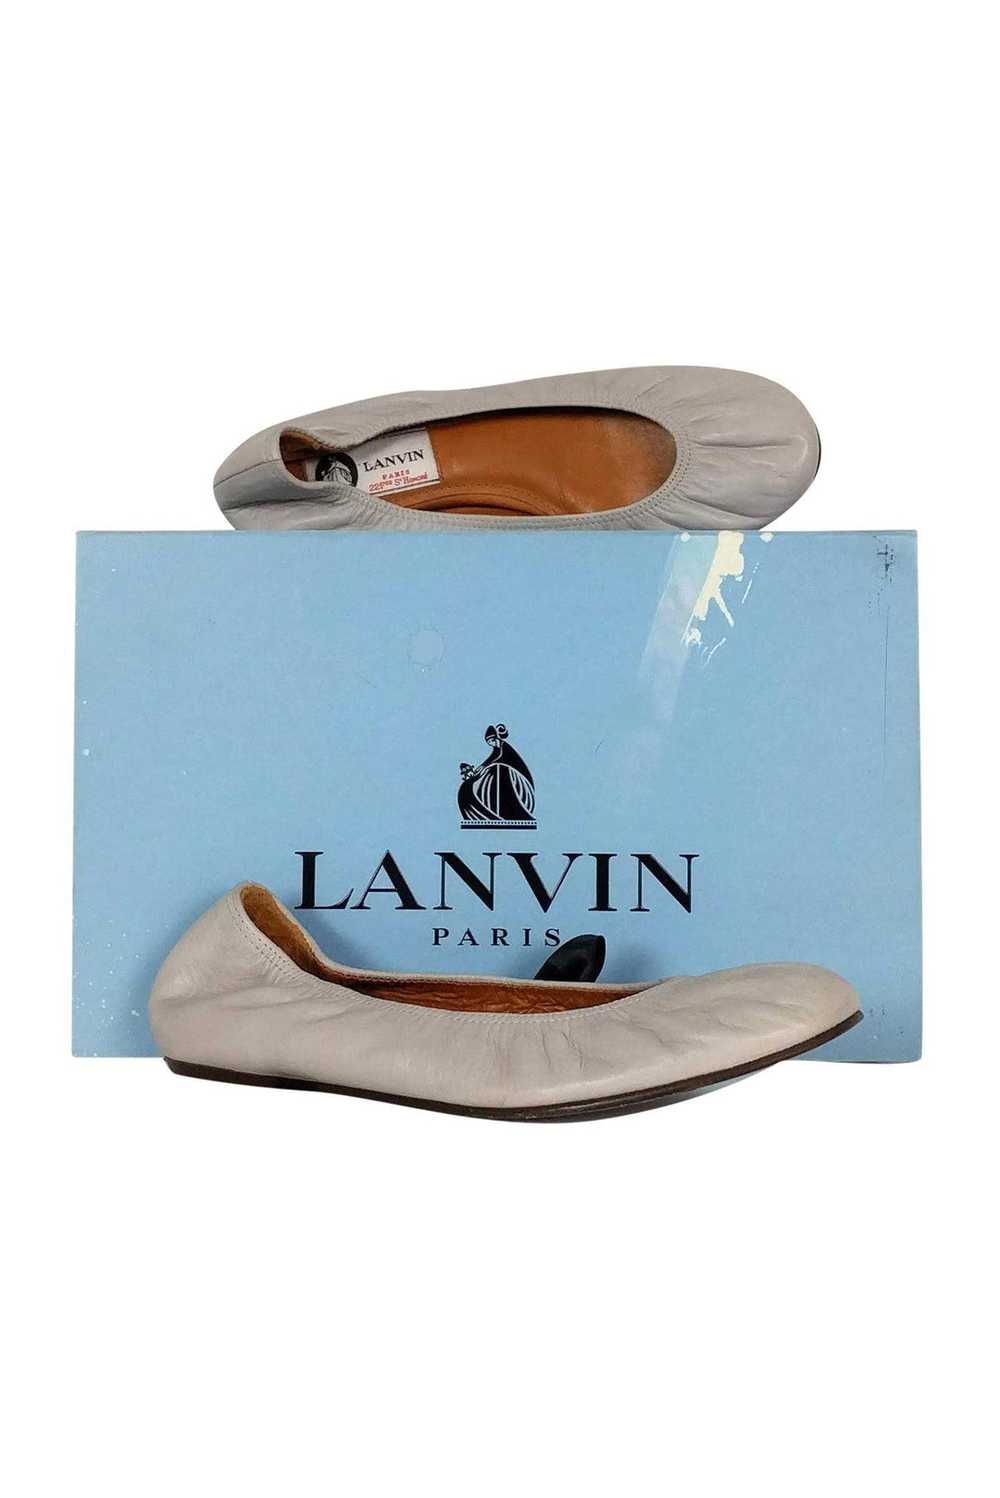 Lanvin - Light Grey Leather Ballet Flats Sz 6 - image 1